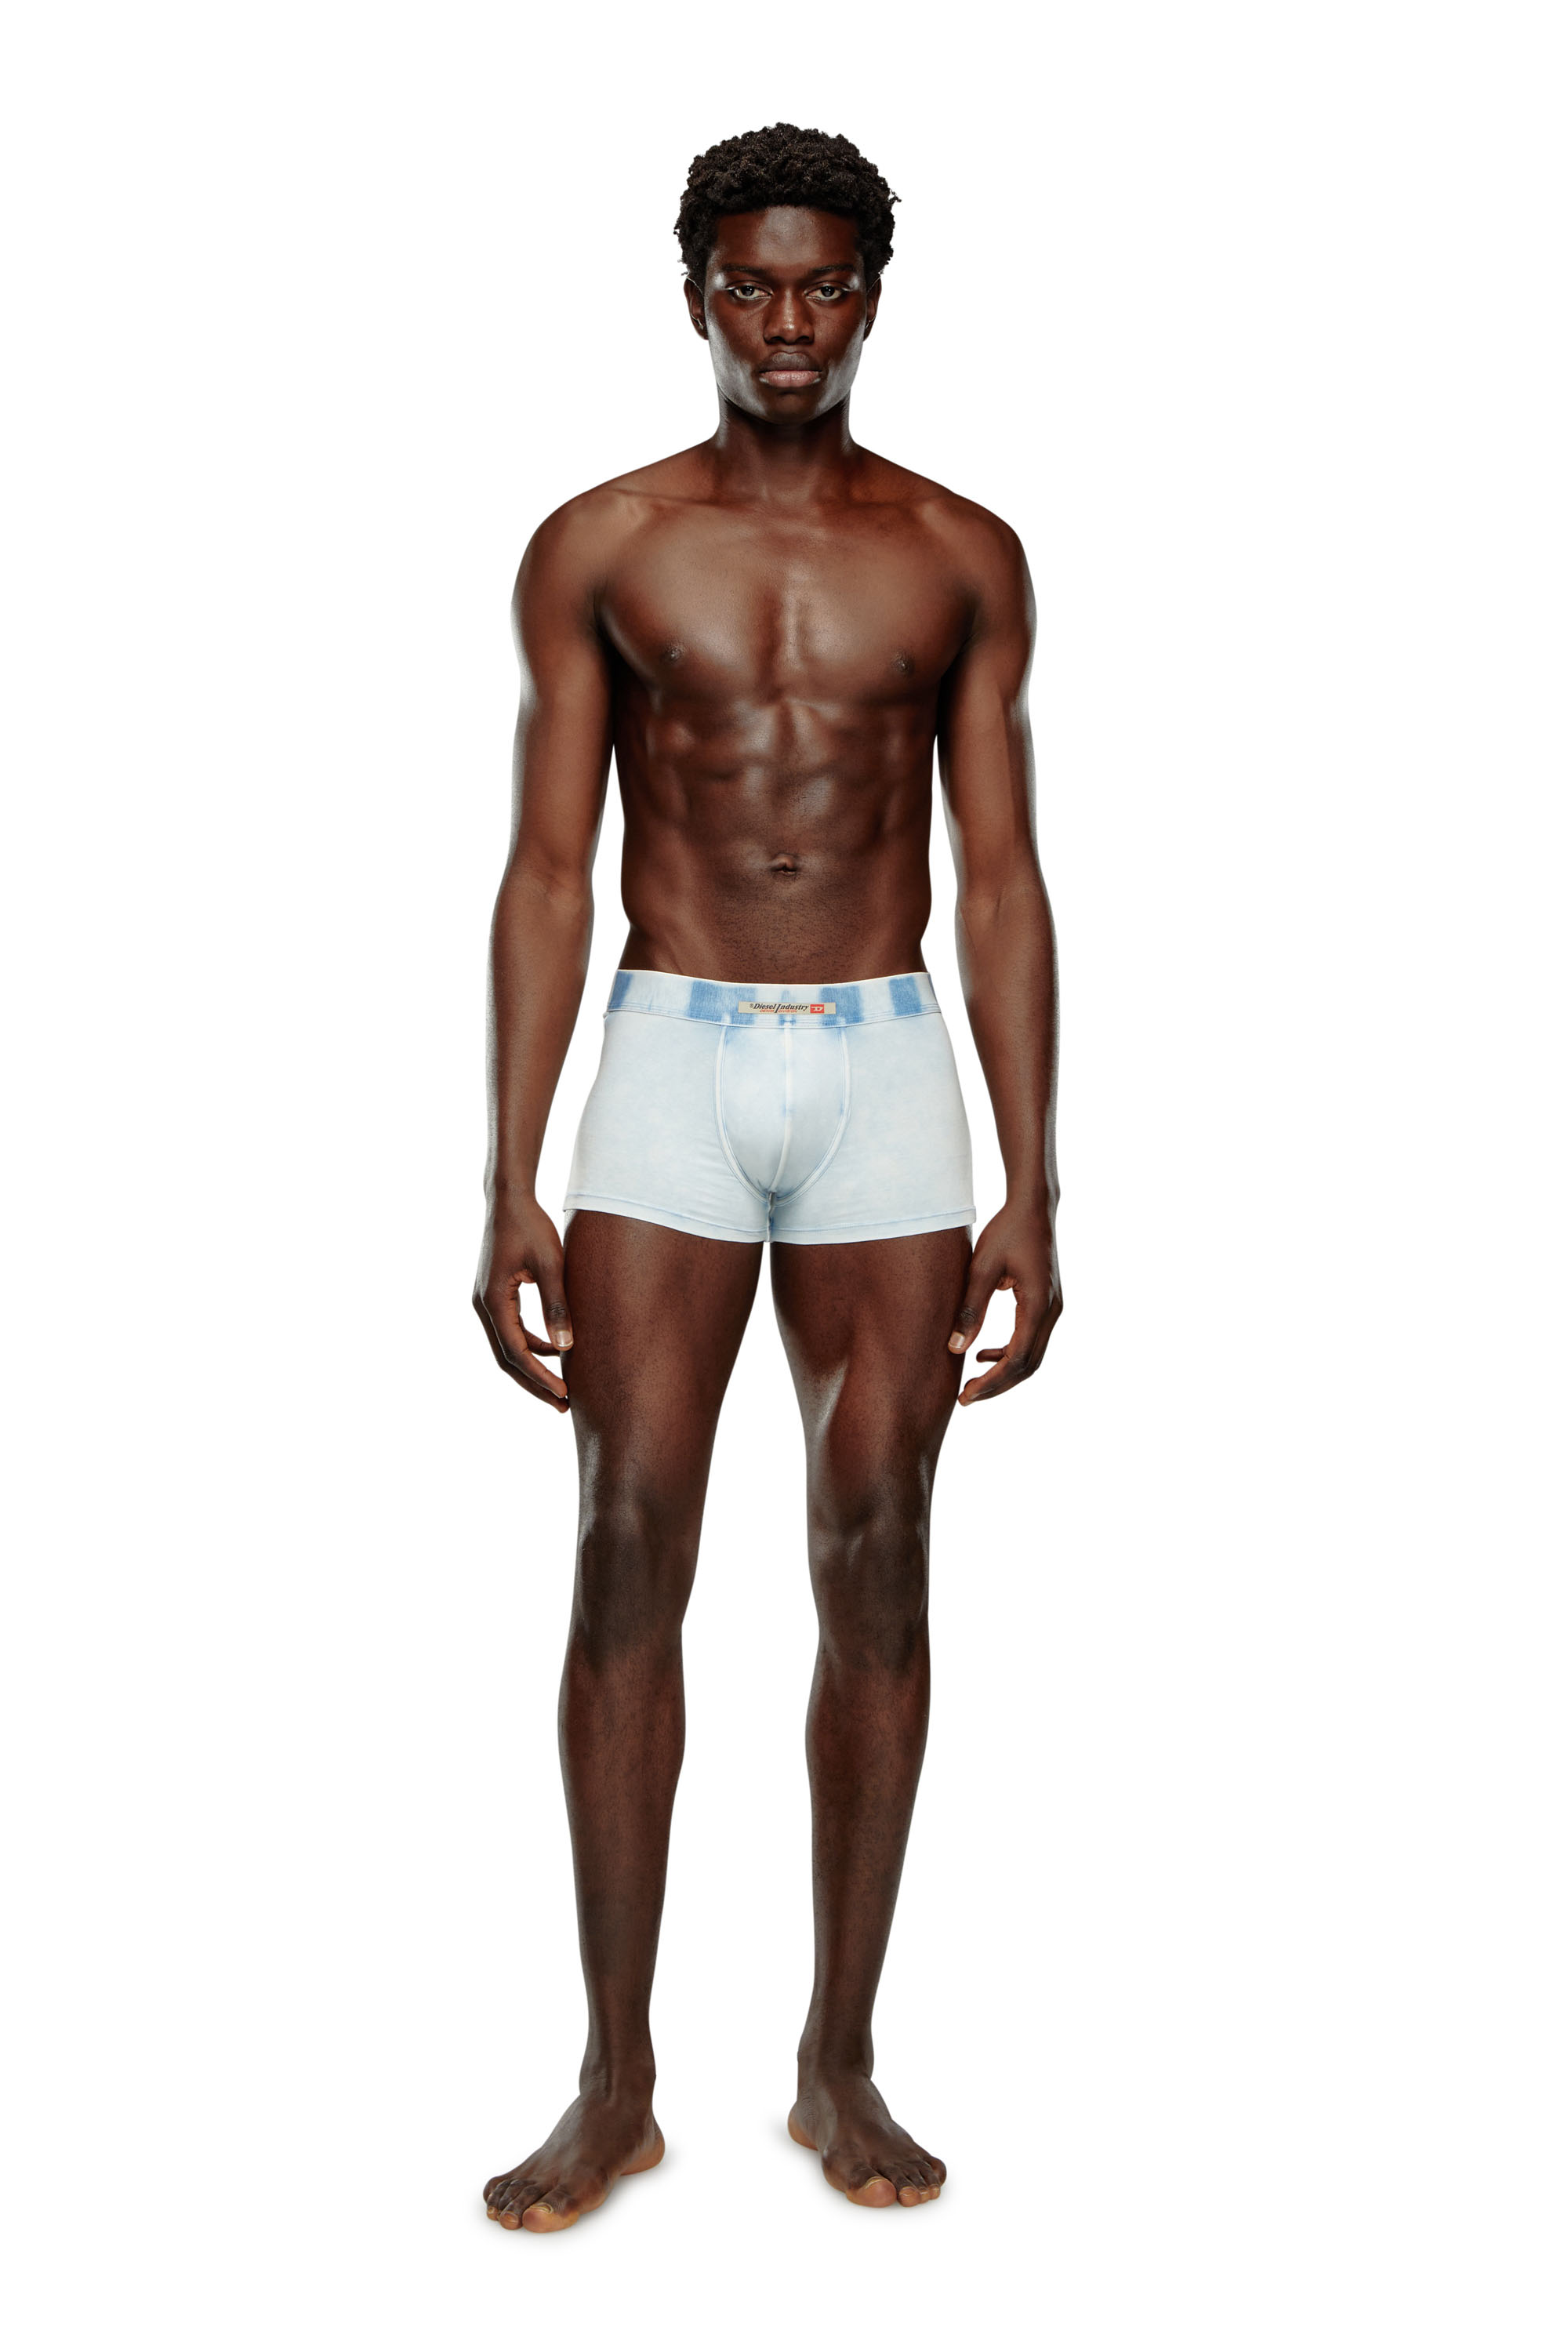 Men's Underwear: Boxers, Briefs, Jockstrap